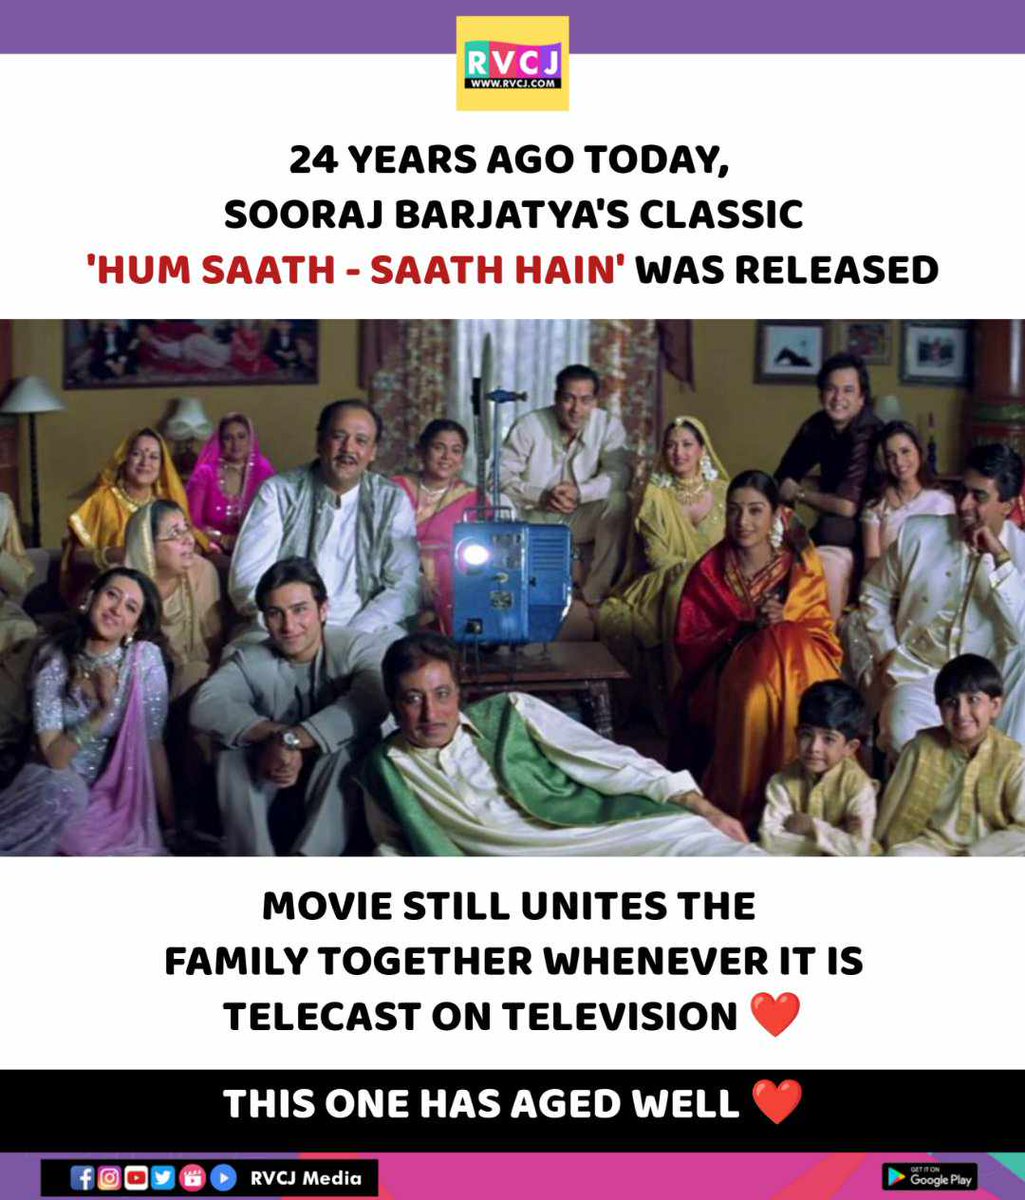 24 years of Hum Saath - Saath Hain

#humsaathsaathhain #salmankhan #soorajbarjatya #rvcjinsta #rvcjmovies